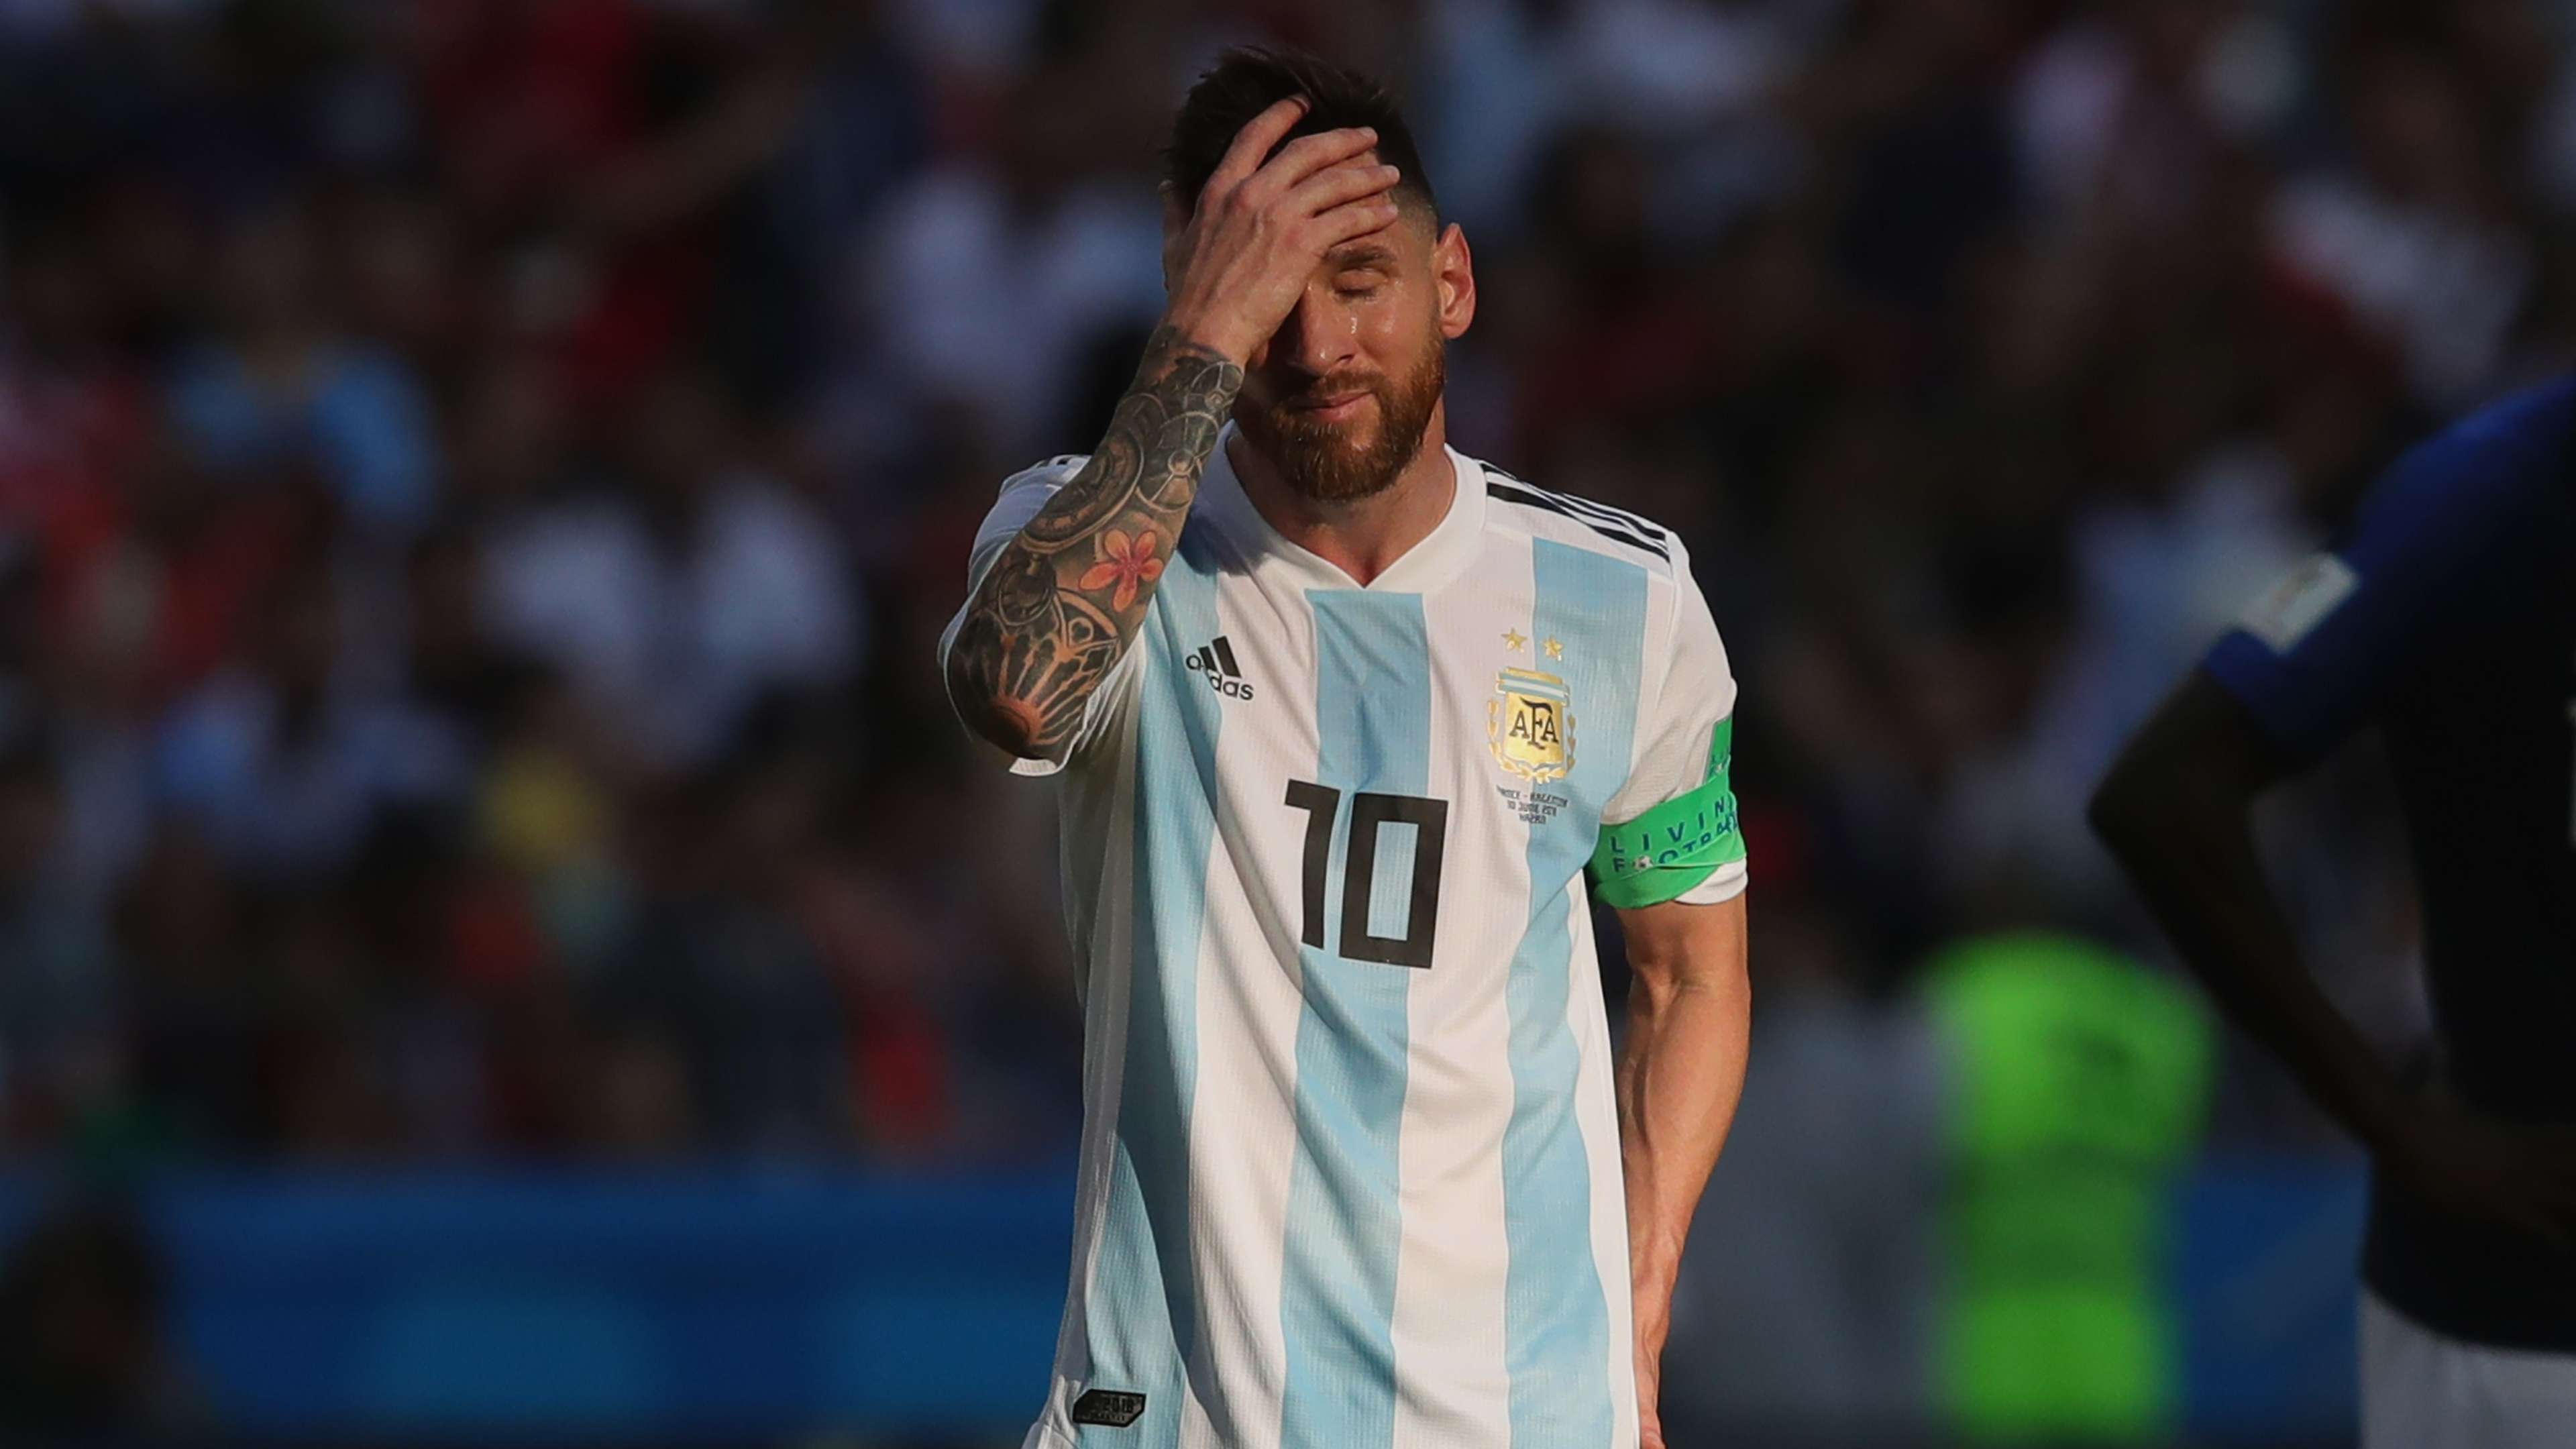 Lionel Messi Argentina 2018 World Cup